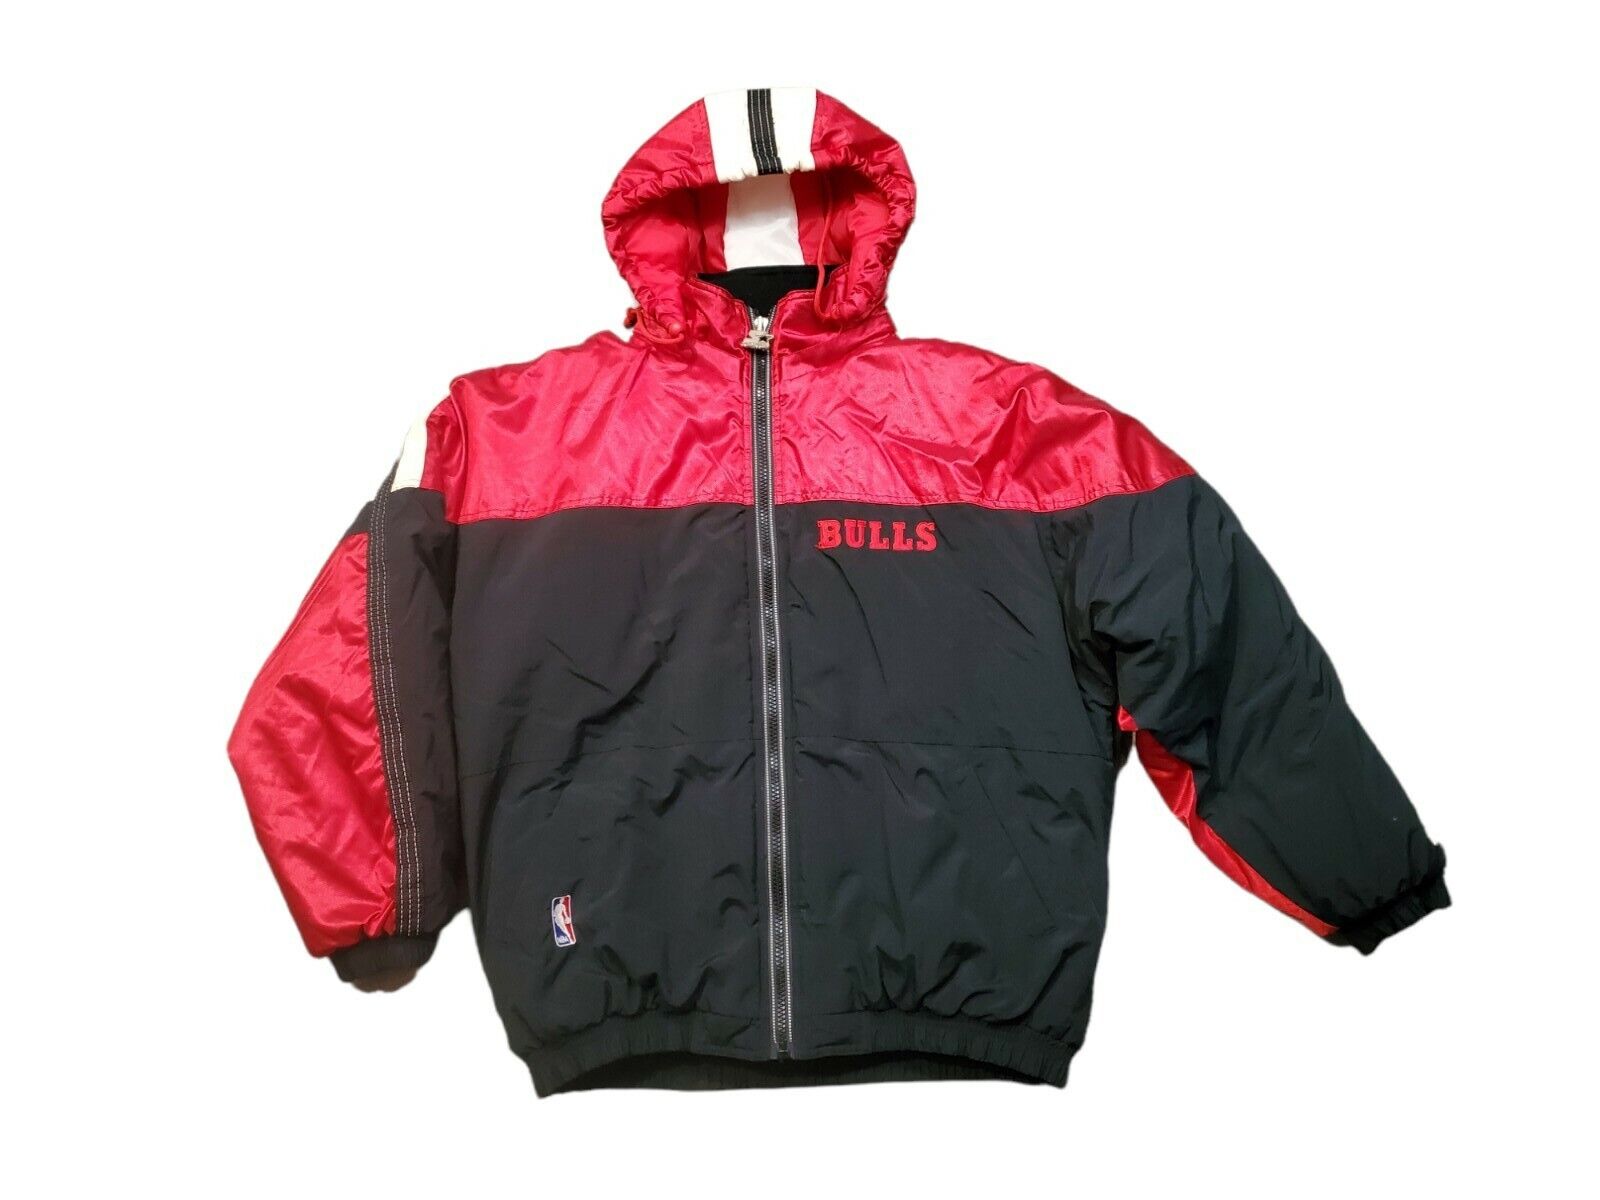 Vintage Retro 90s Chicago Bulls Starter Jacket Size XL NBA Basketball